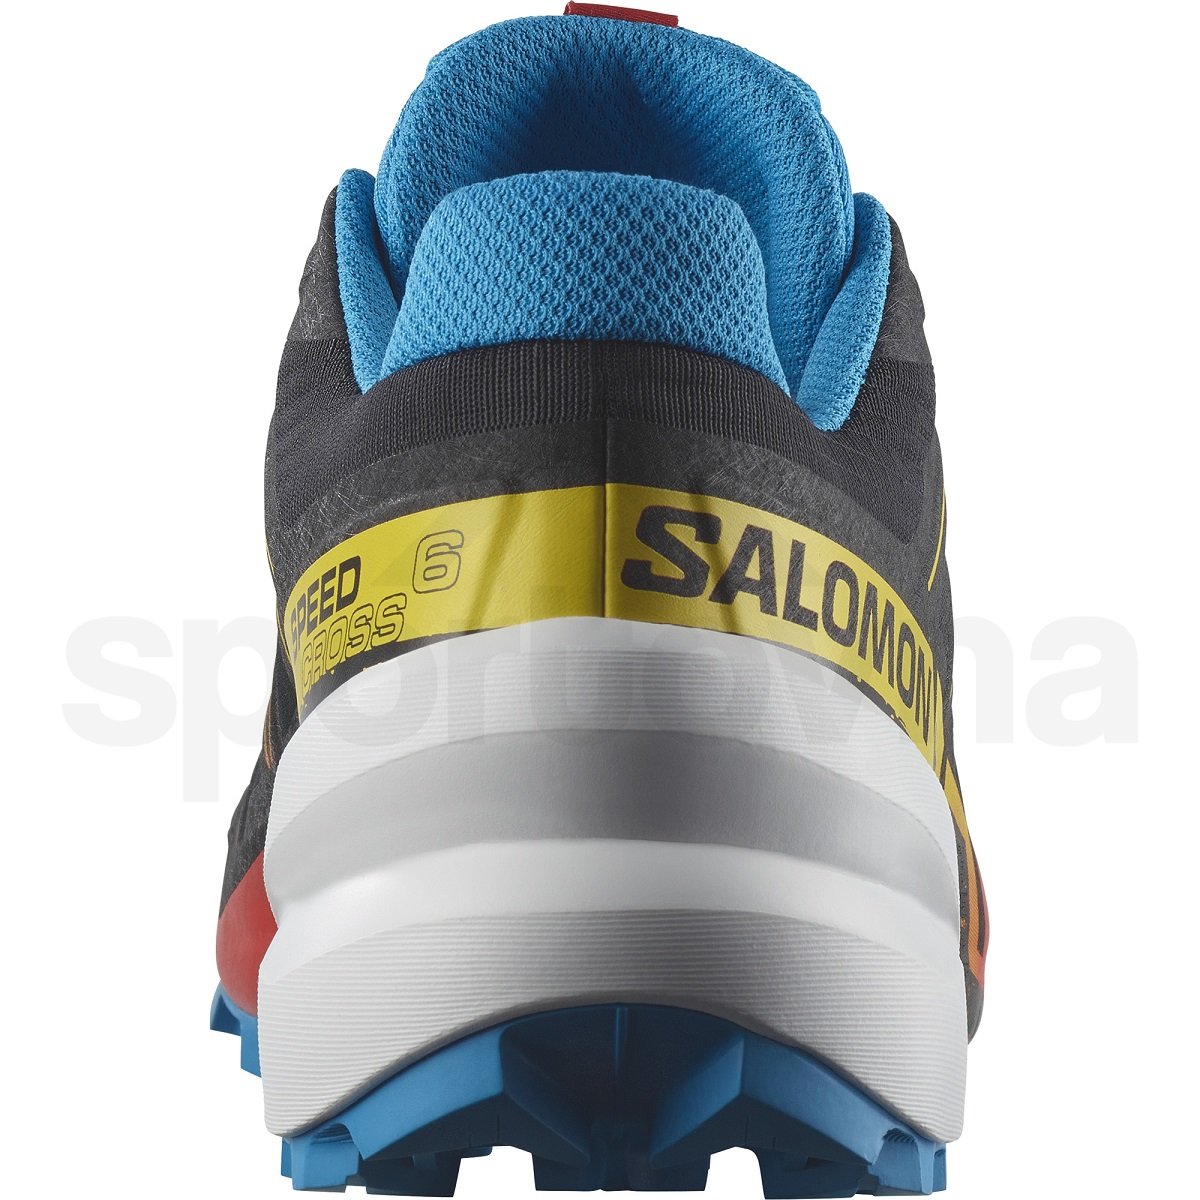 Obuv Salomon Speedcross 6 M - černá/bílá/modrá